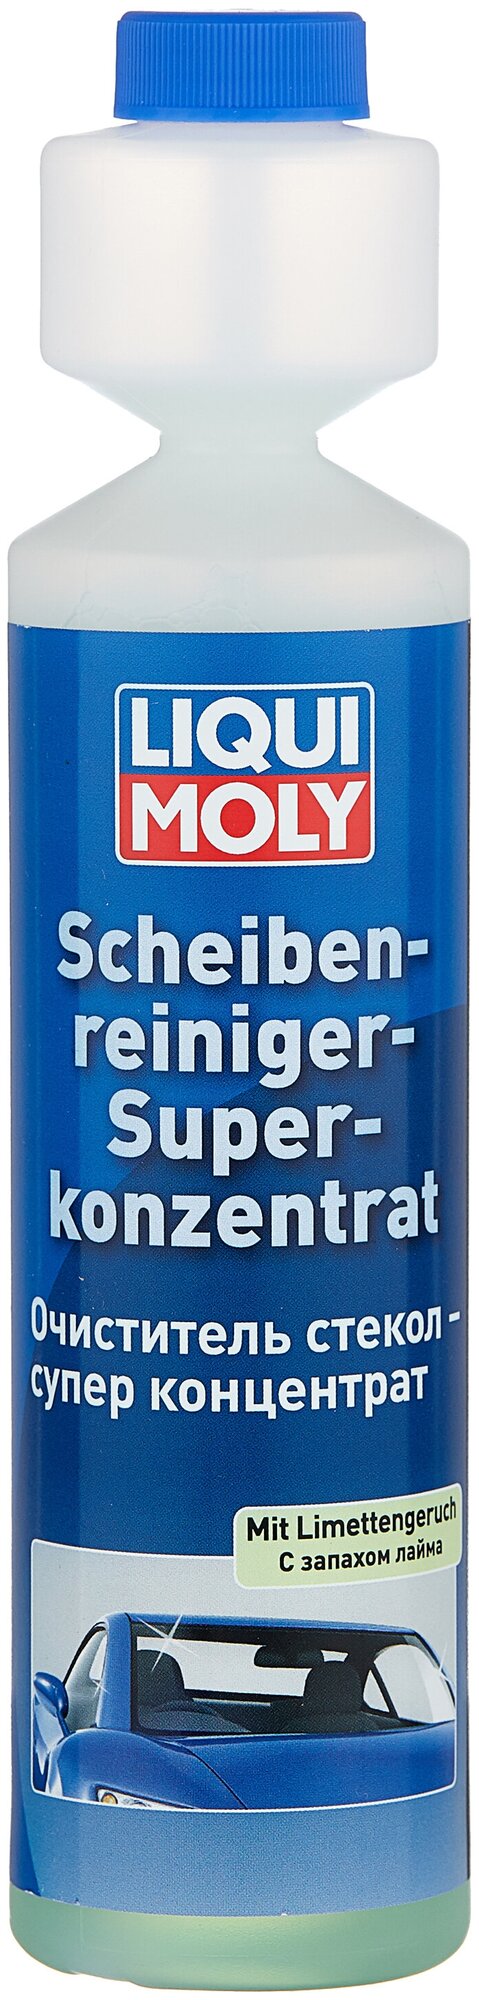 2385 Scheiben-Reiniger-Super Konzentrat — Очиститель стекол суперконцентрат (лайм) 0.25 л.